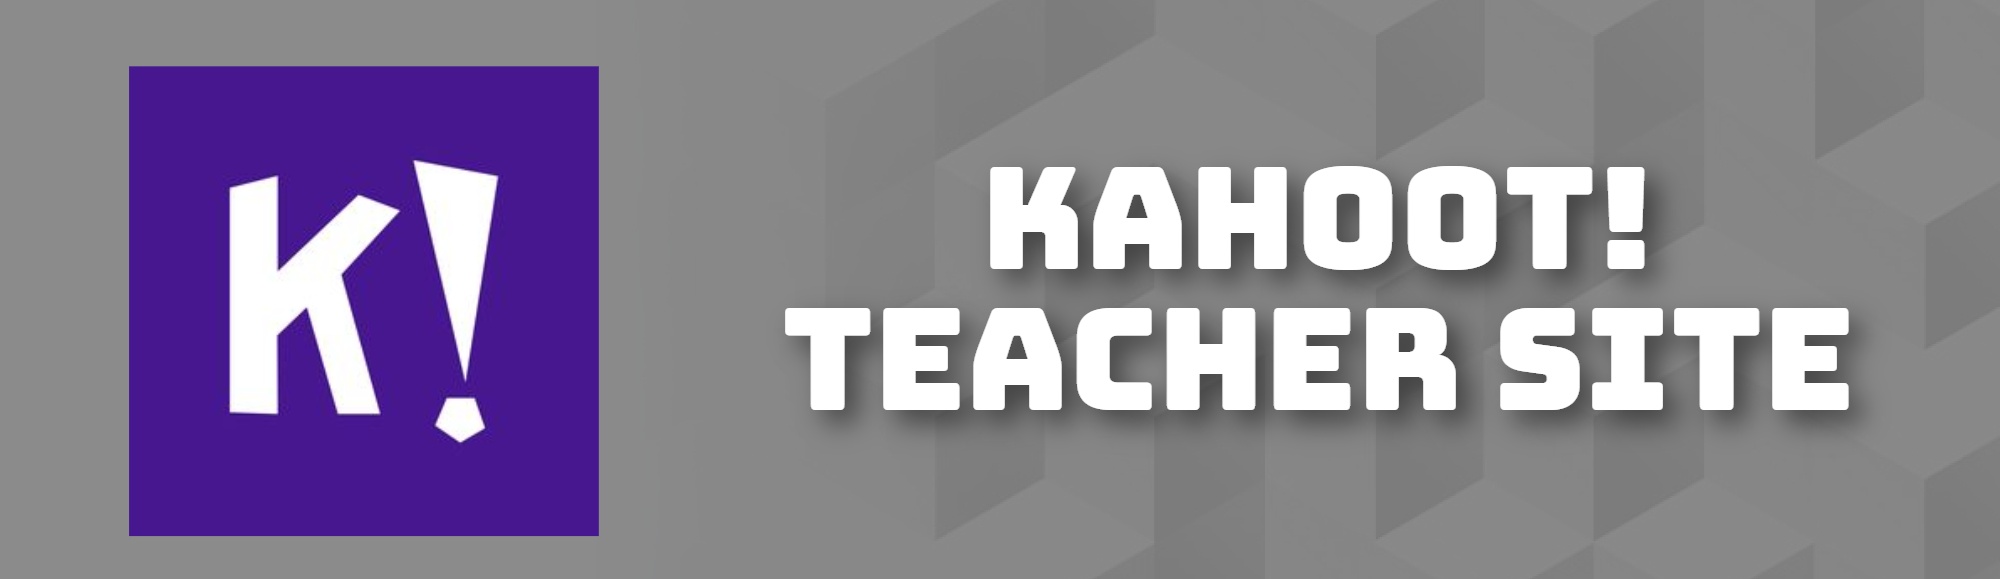 KAHOOT! Teacher Site